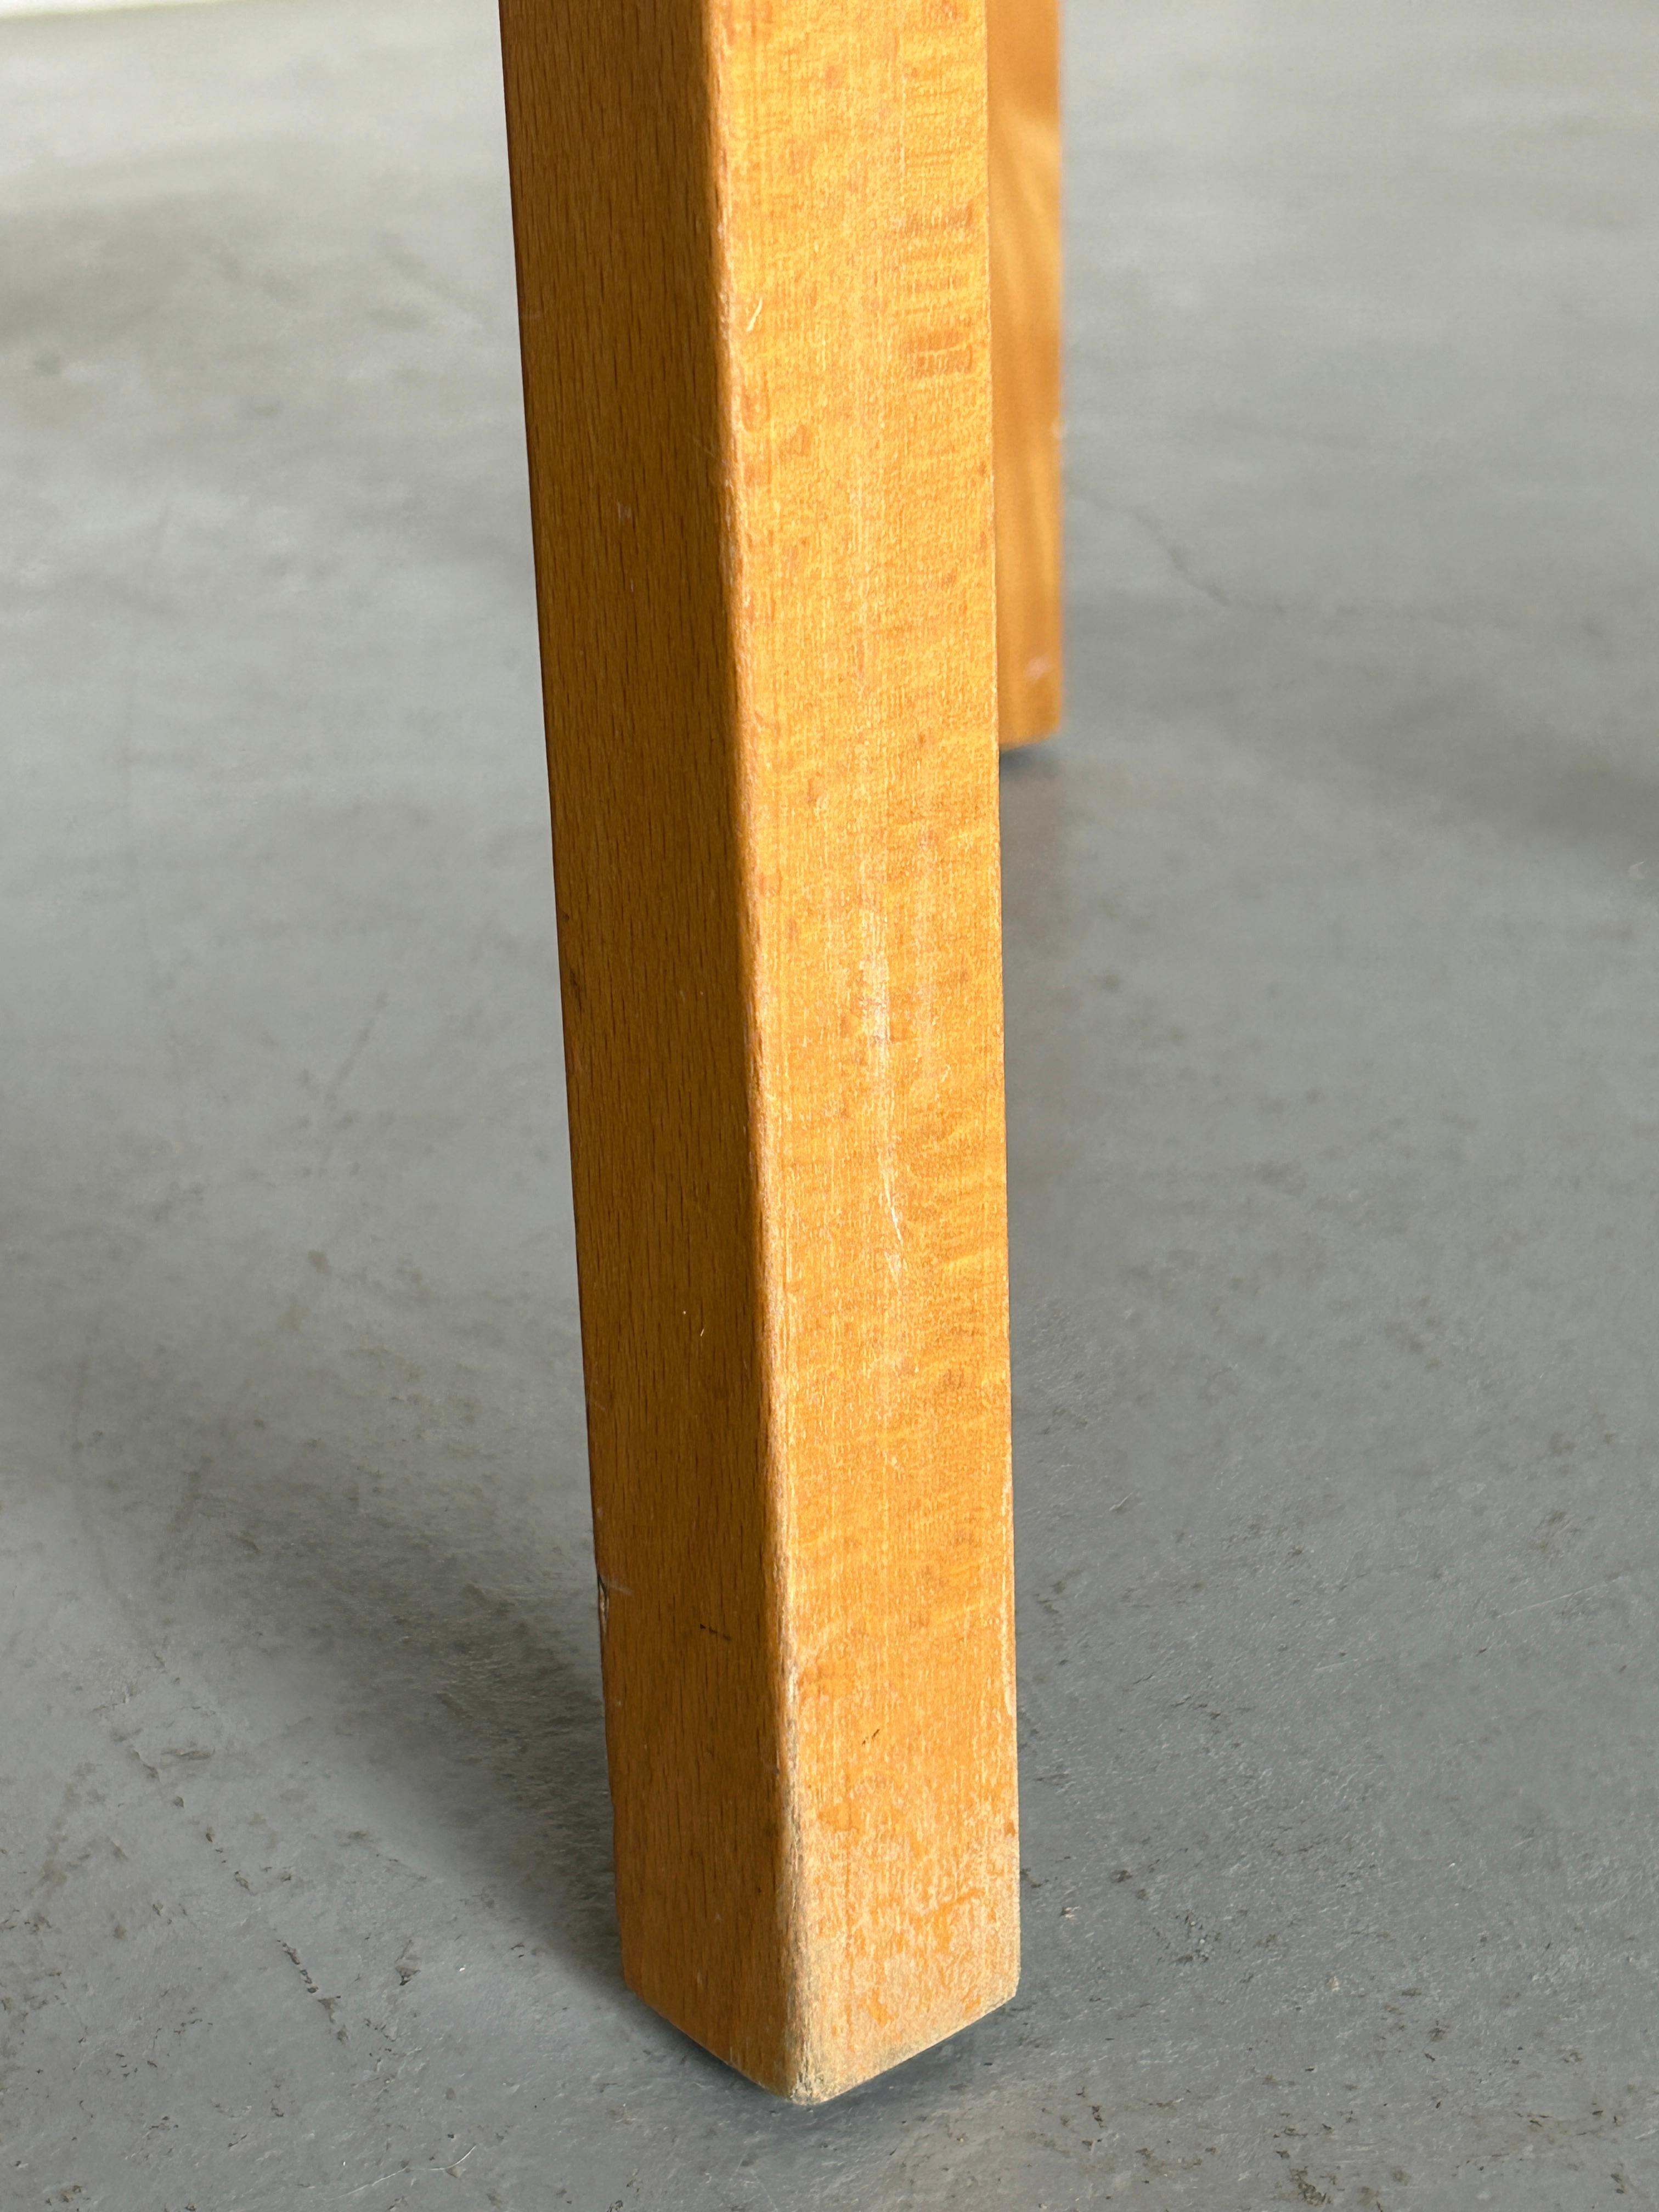 Thonet Postmodern Sculptural Wooden Chair, 1990s Austria For Sale 10